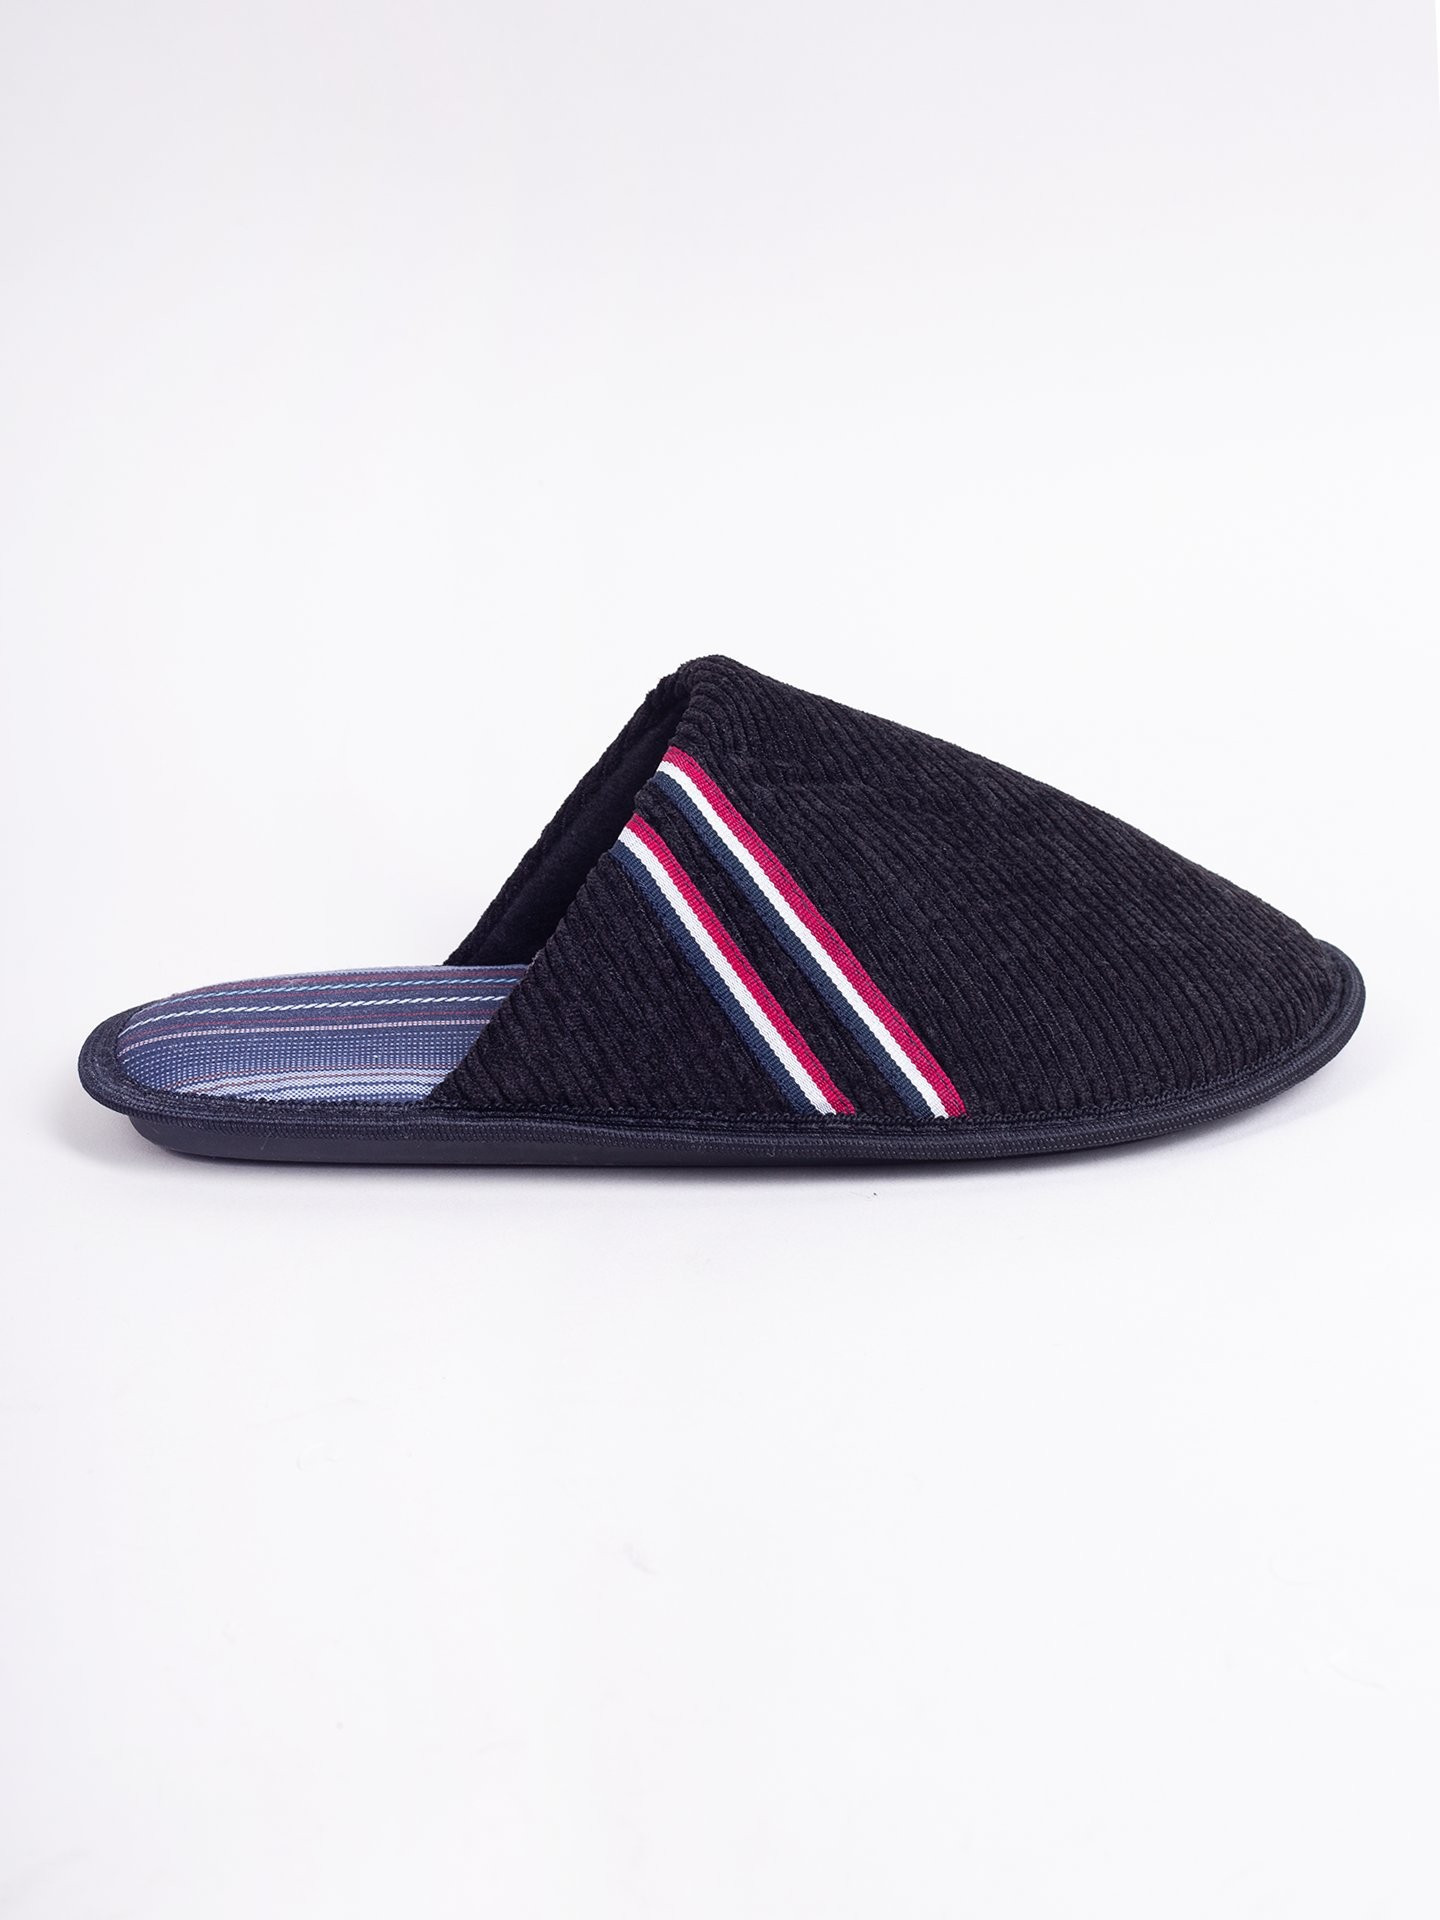 Men's Slippers model 17957908 Black 4243 - Yoclub